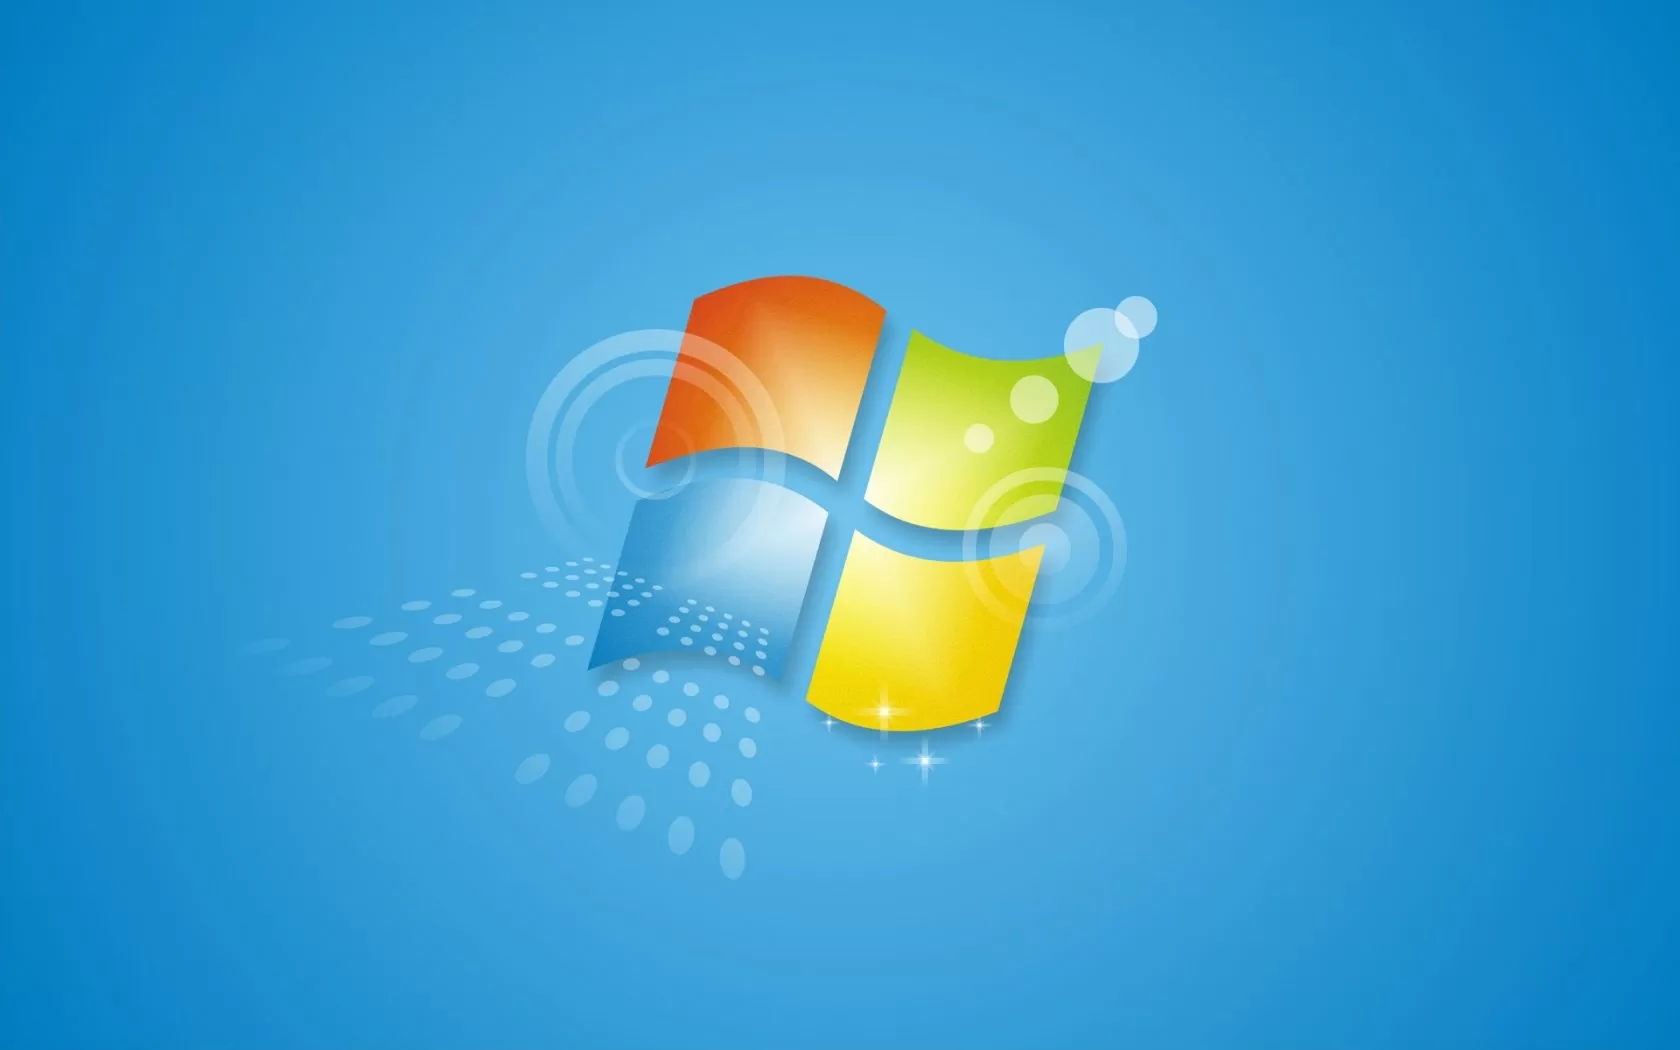 Windows 7 still in use across hundreds of millions of PCs